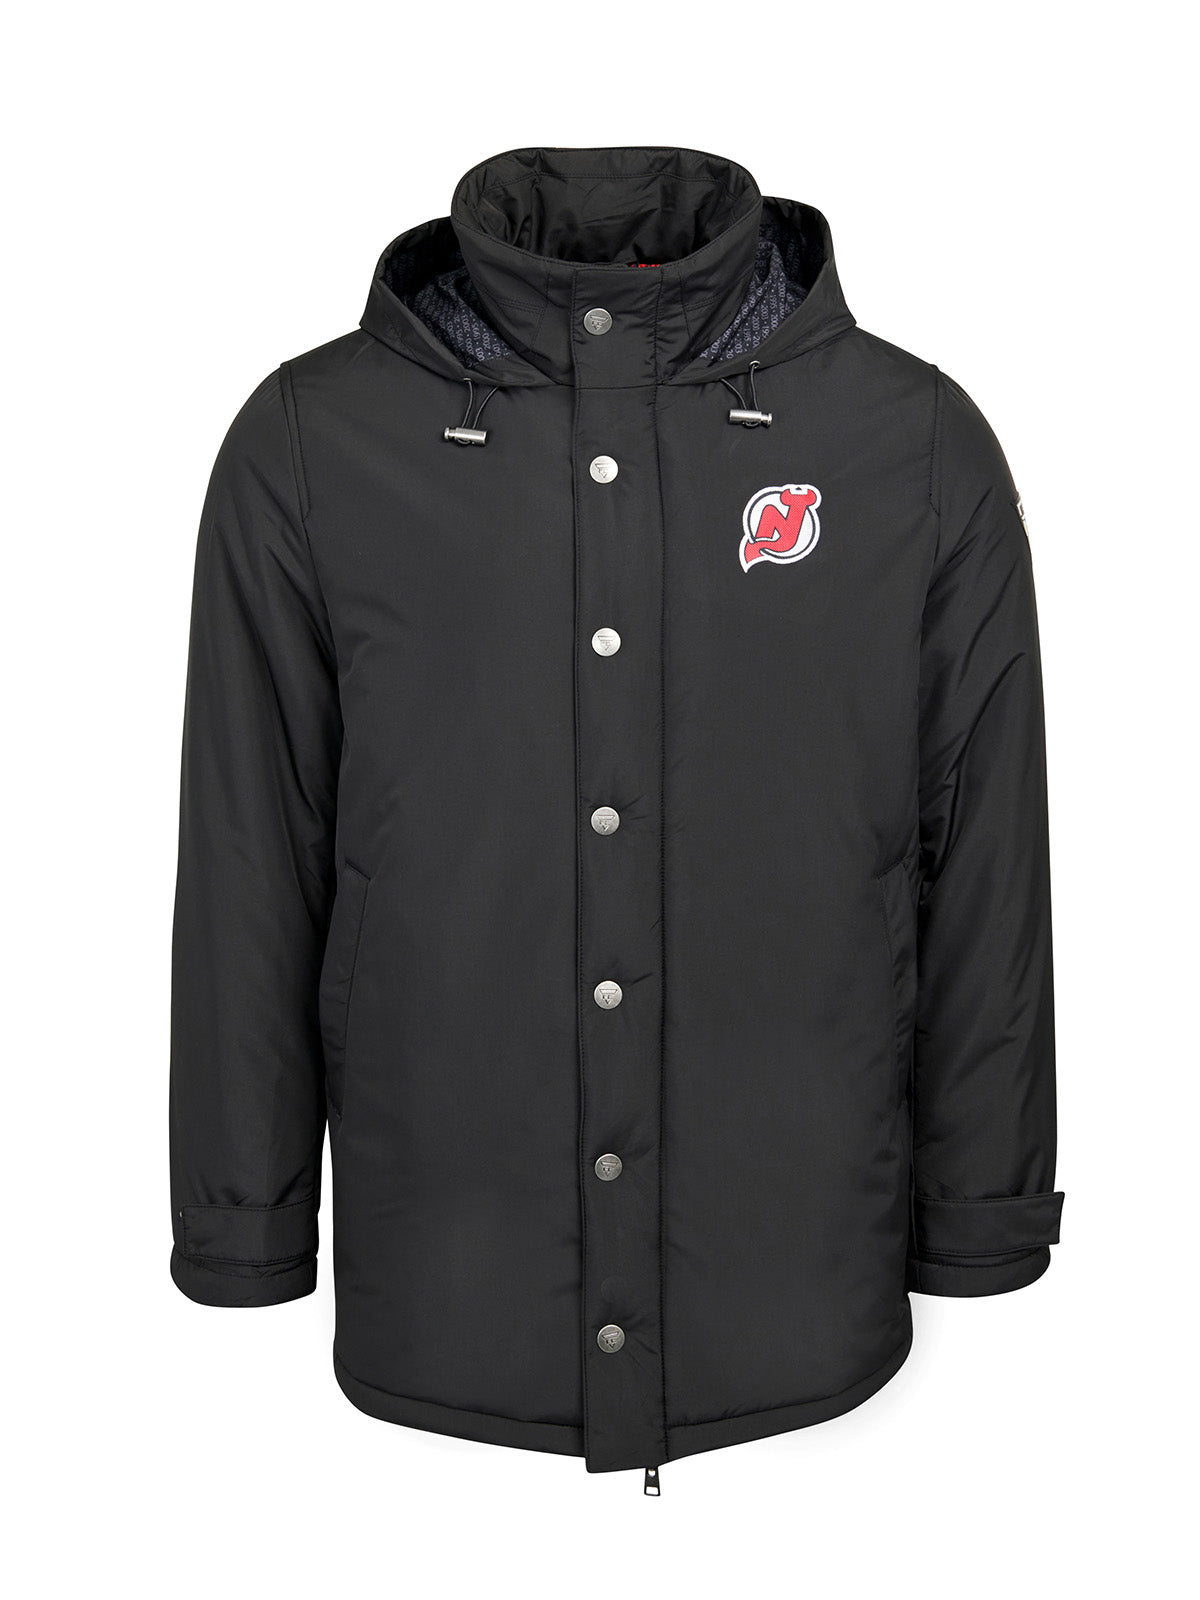 New Jersey Devils Coach's Jacket